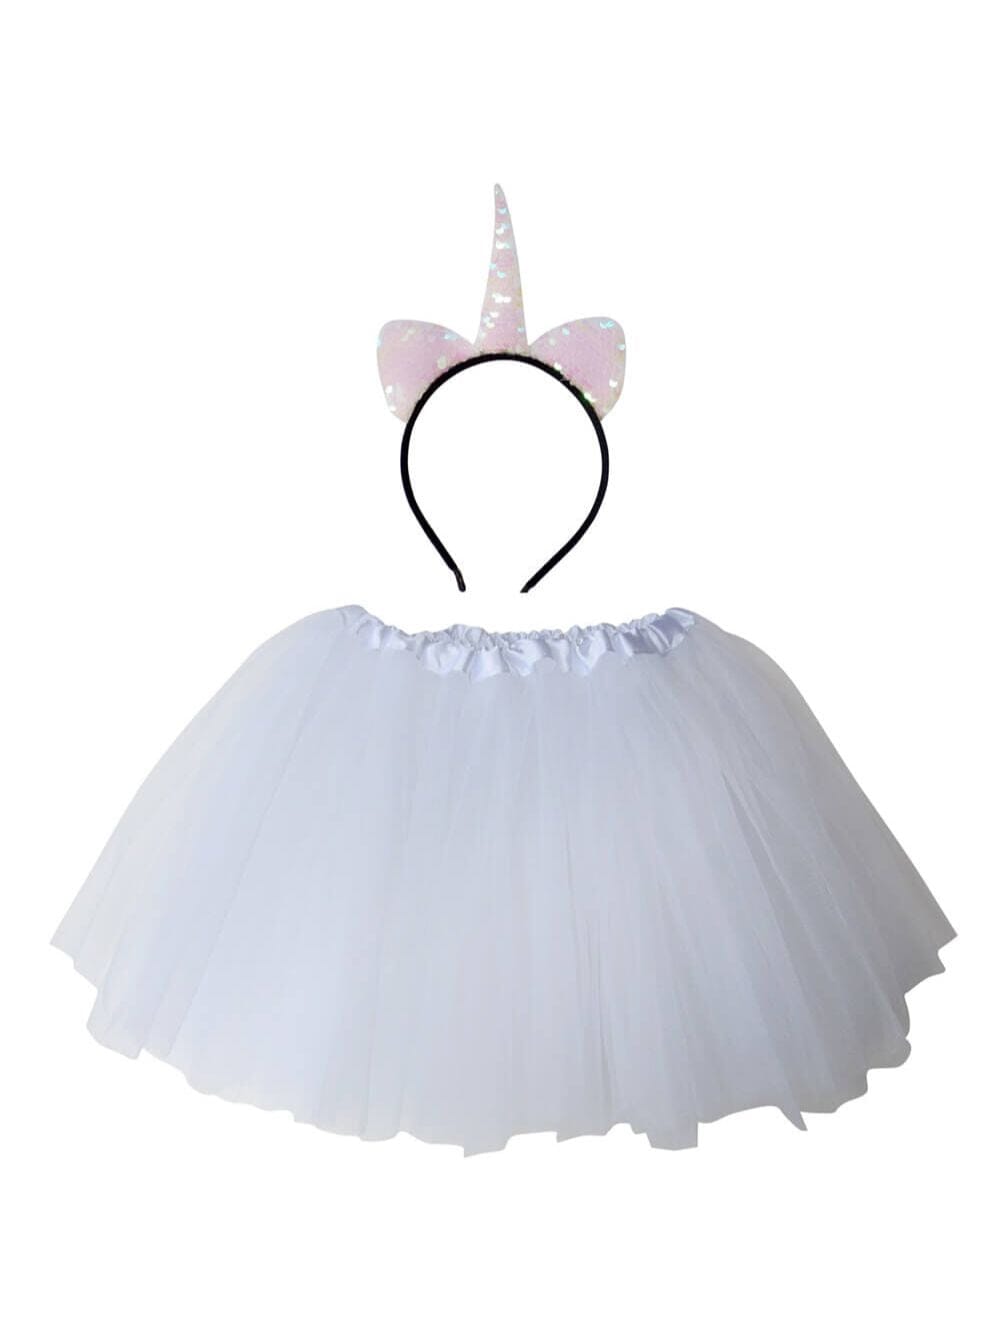 Adult White Unicorn Costume - Tutu Skirt & Flip Sequin Headband Horn Set for Adult or Plus Size - Sydney So Sweet